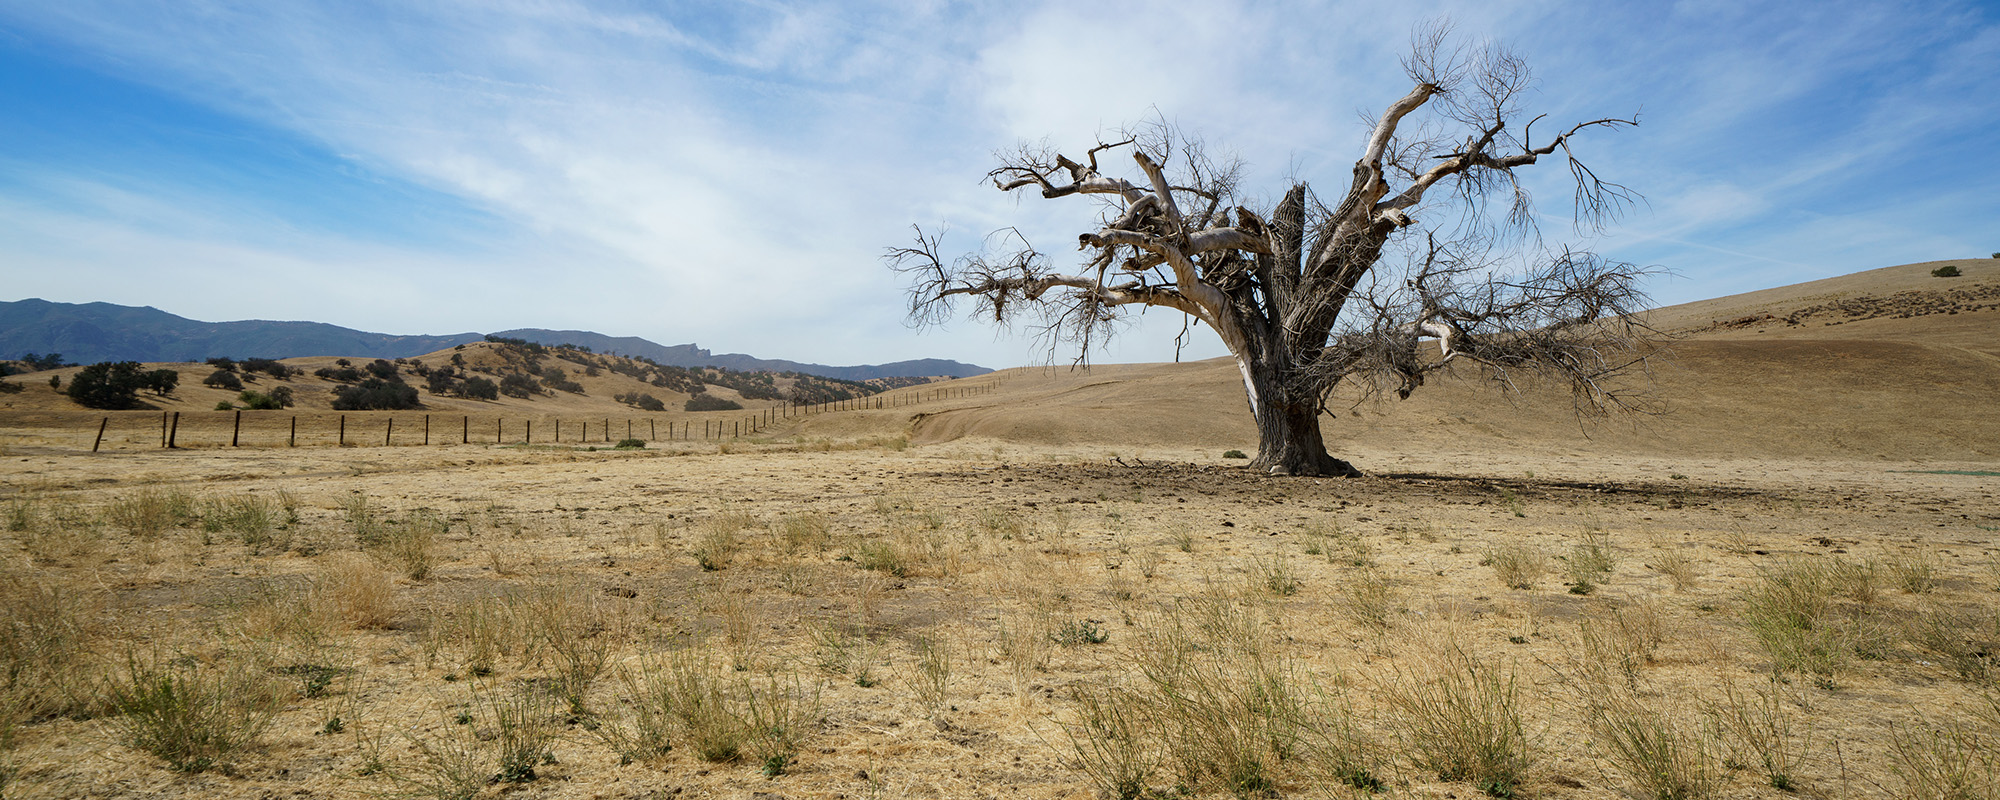 California Drought Series: Episode 2